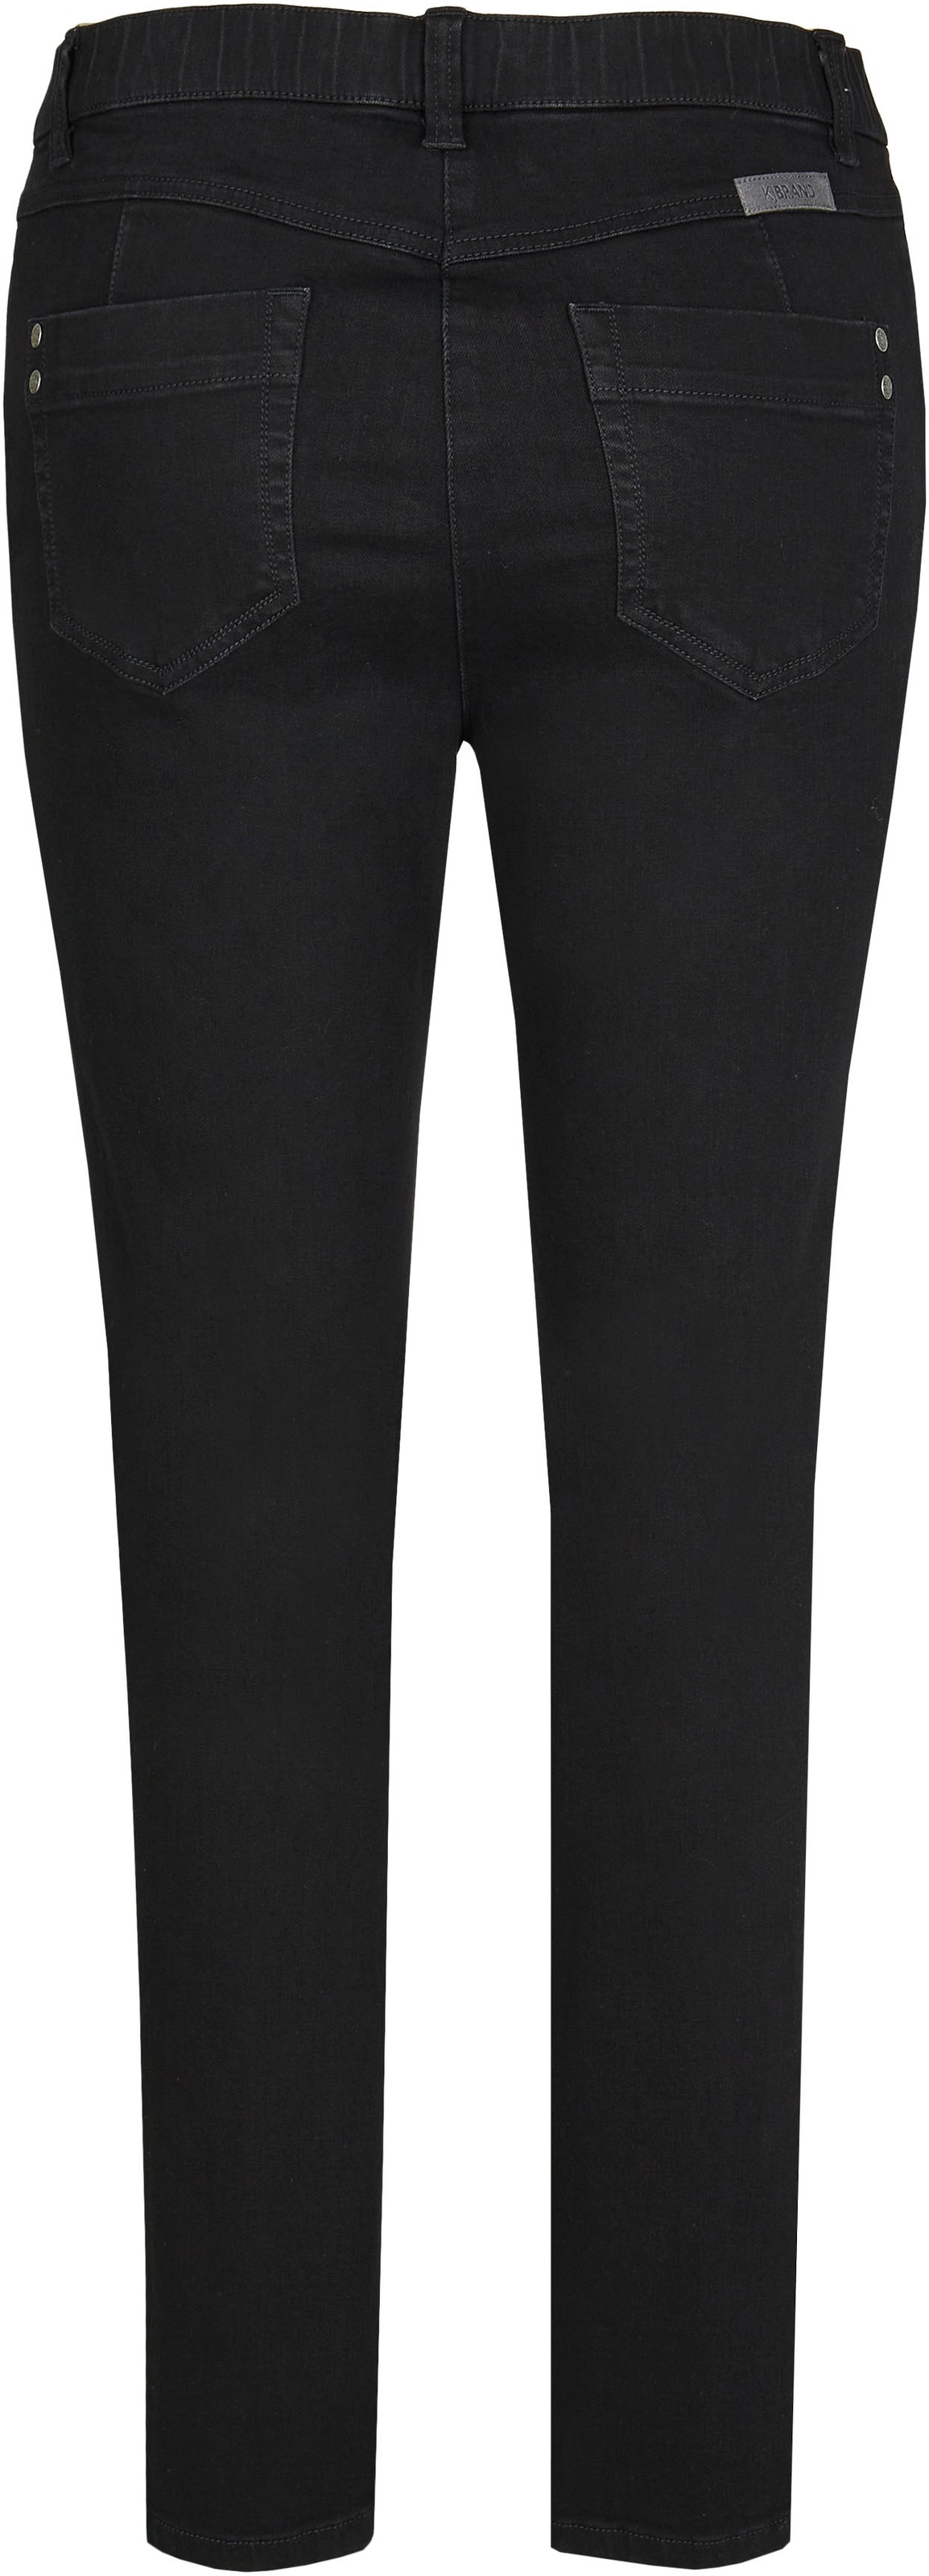 KjBRAND 5-Pocket-Jeans »Jeans Betty CS Röhre«, ideal bei schlanken Oberschenkeln